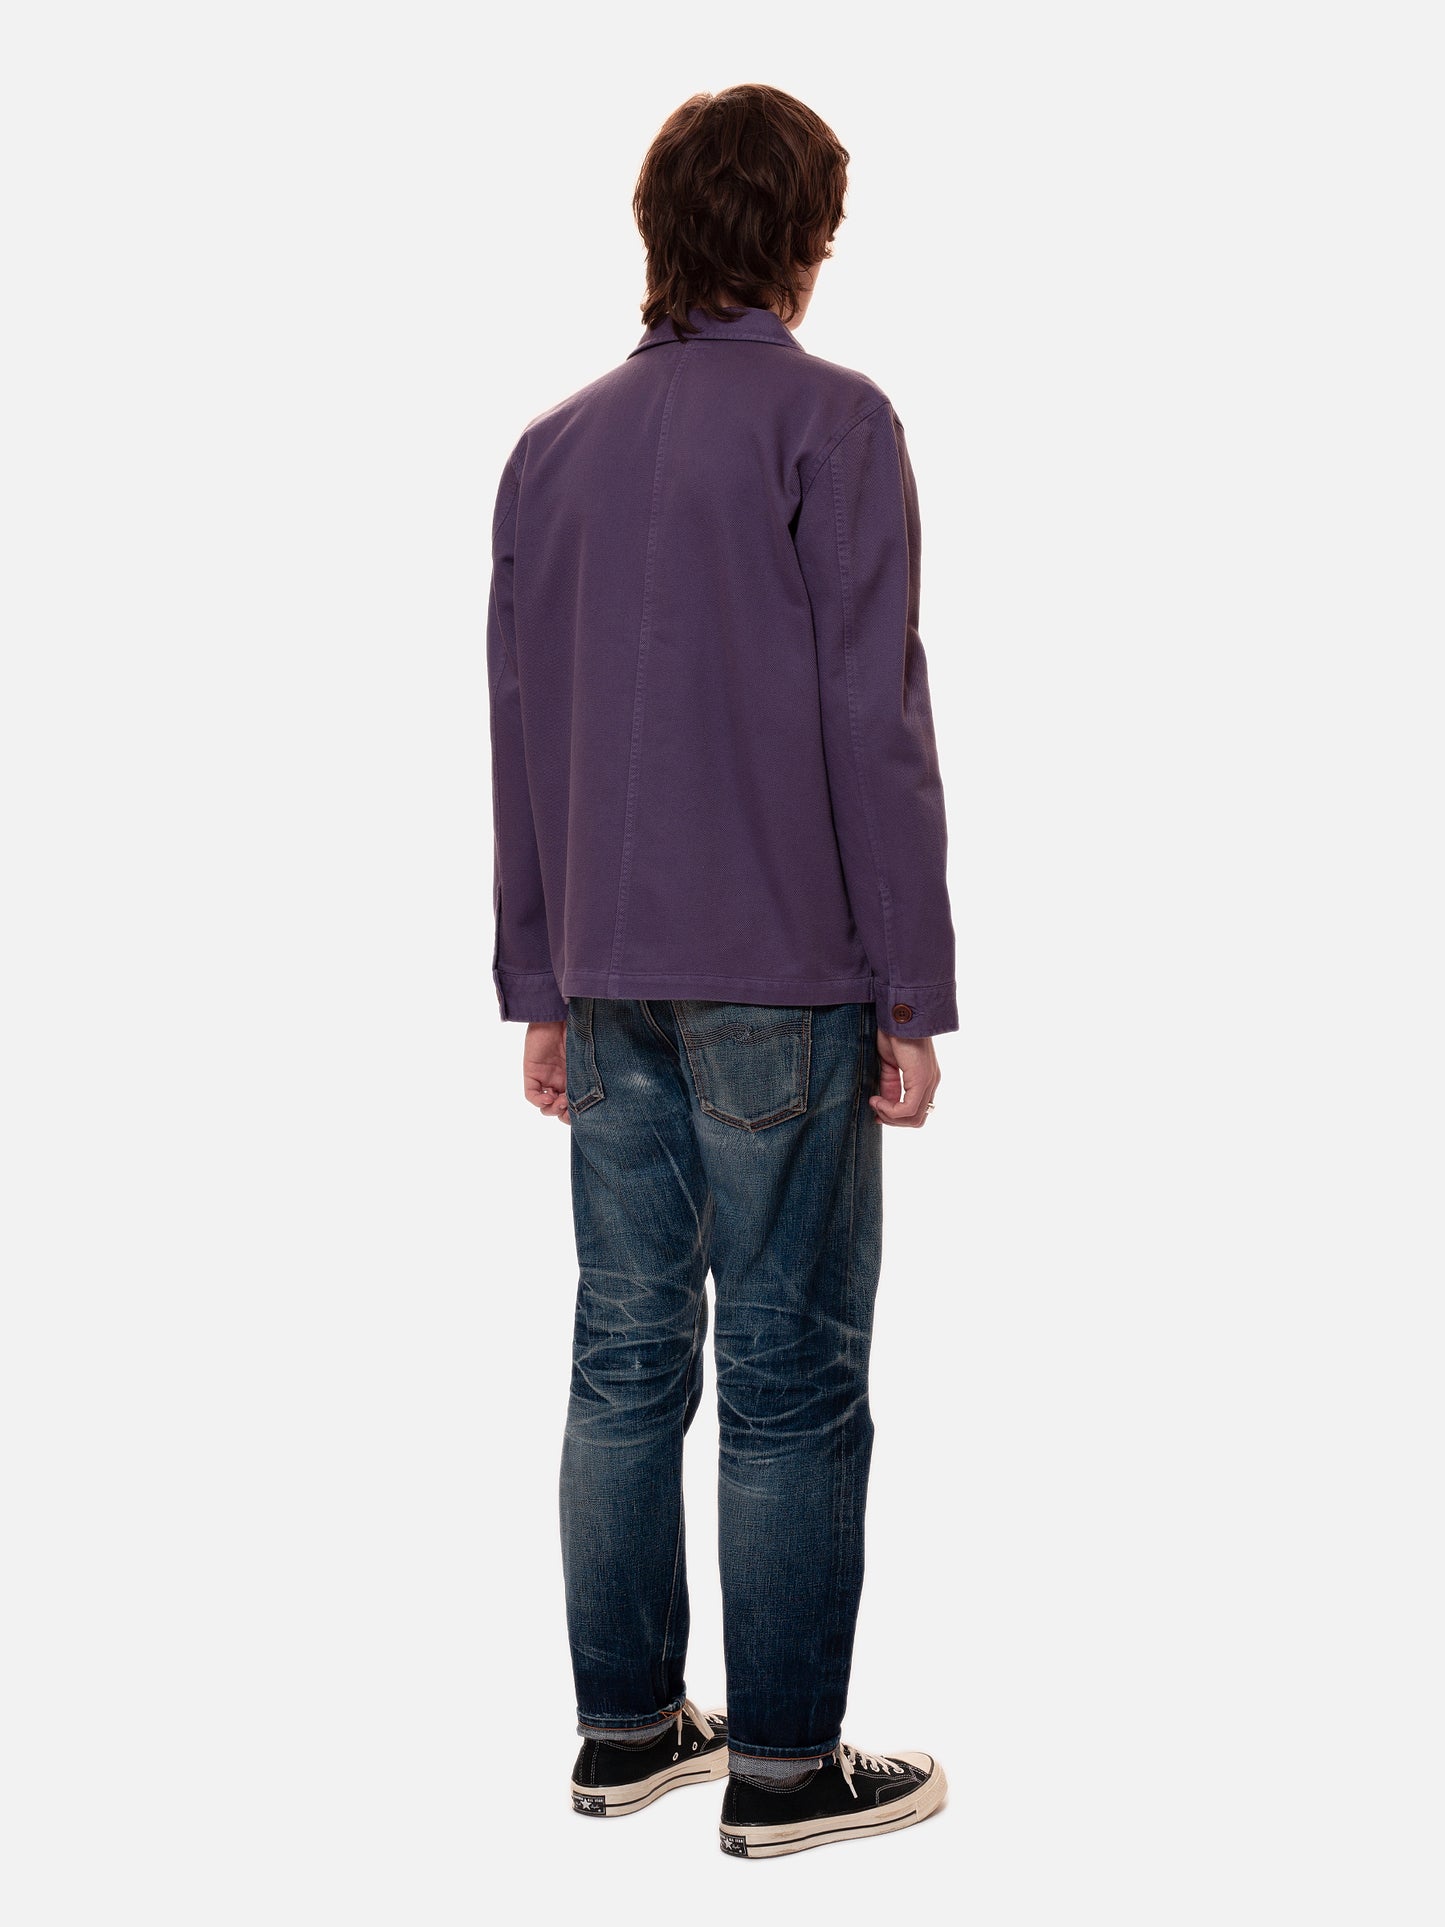 Nudie Jeans Barney Worker Jacket Lilac